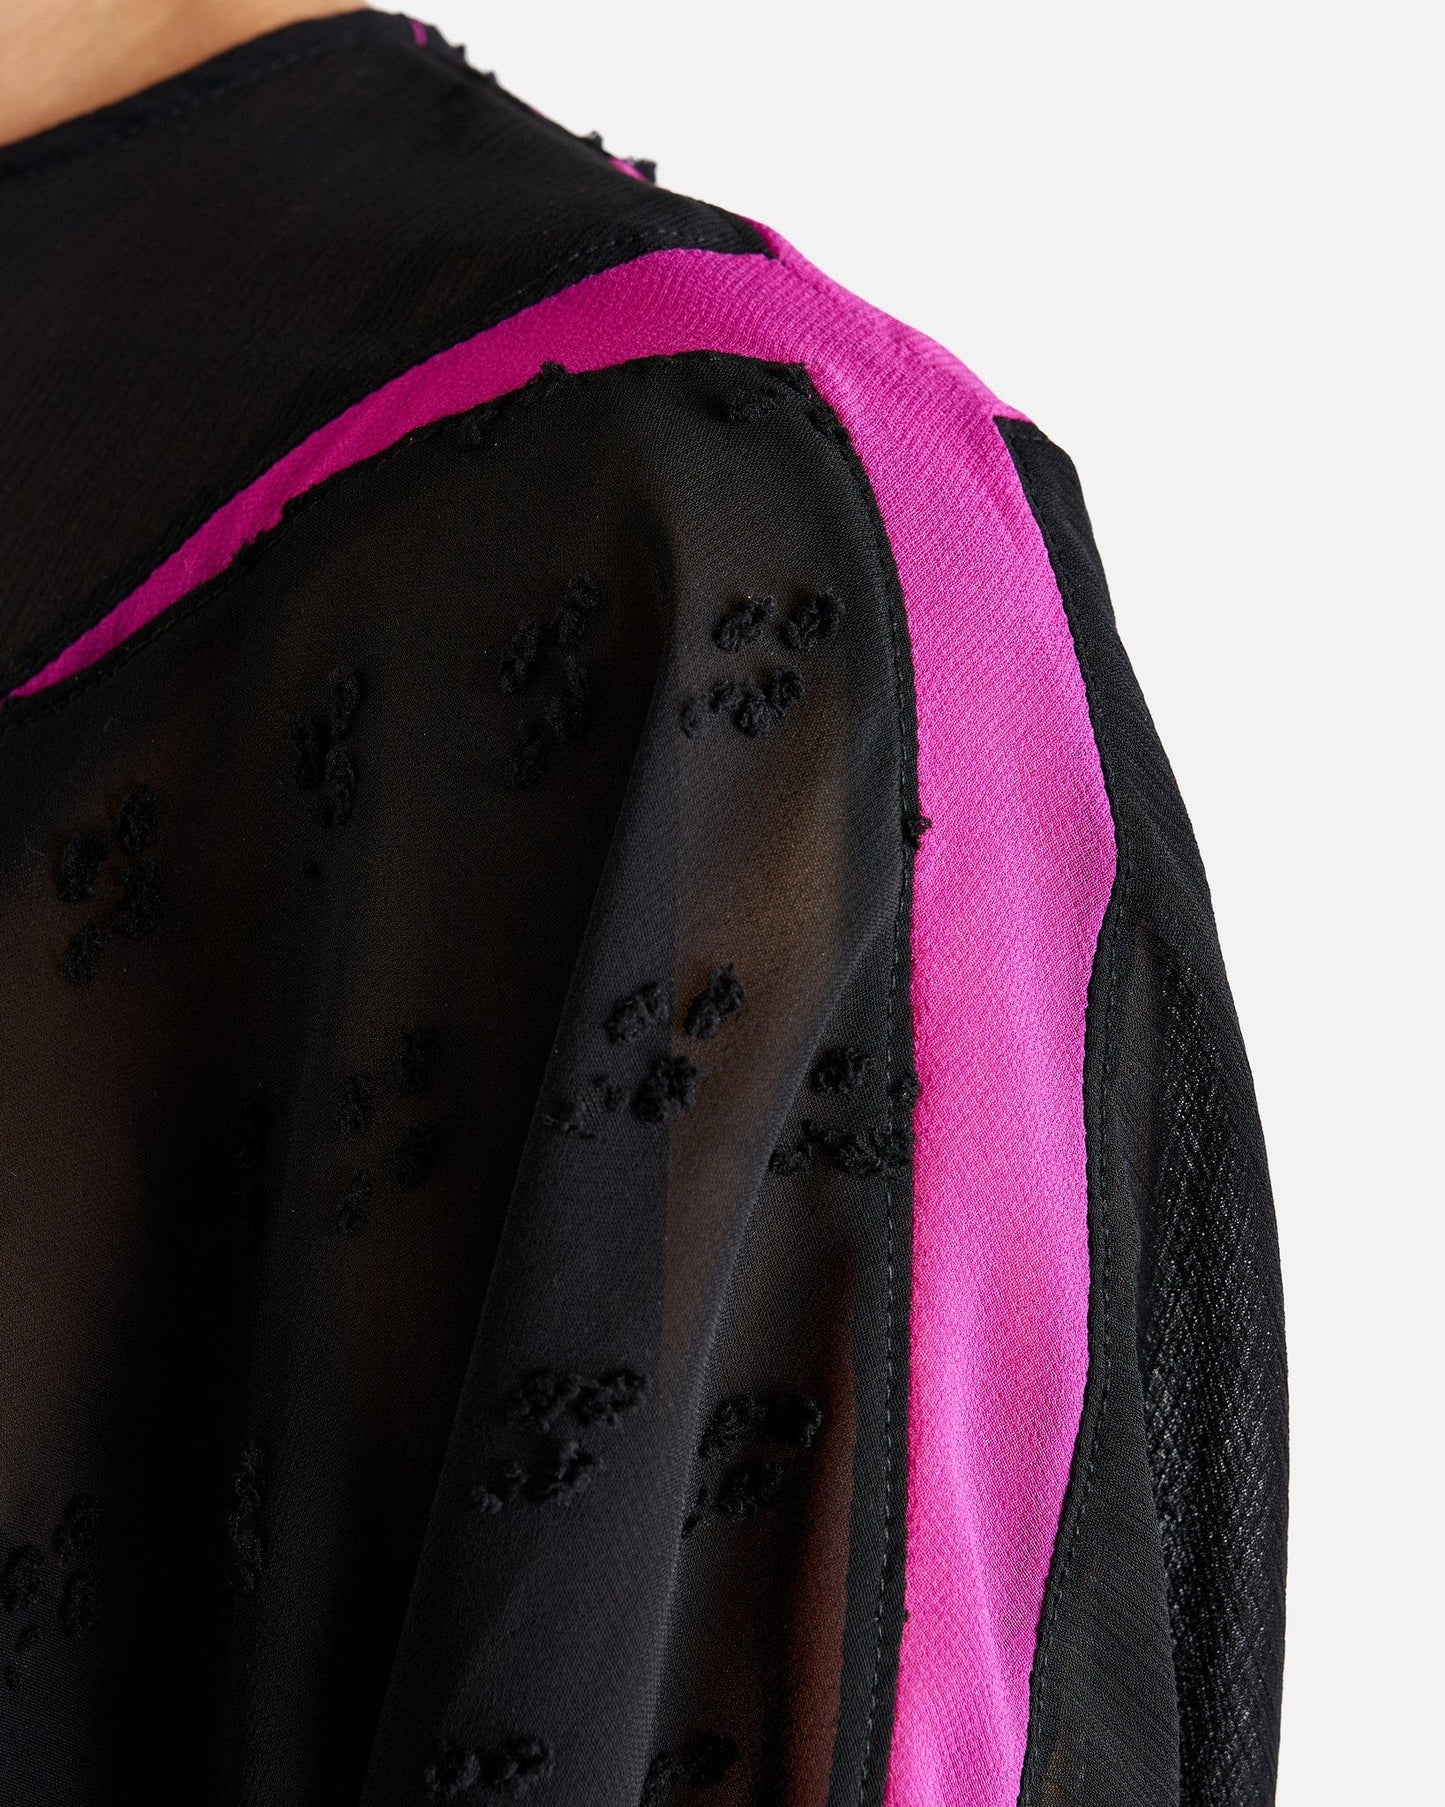 Paolina Russo Women Dresses Bat Sleeve Maxi Dress in Black/Pink